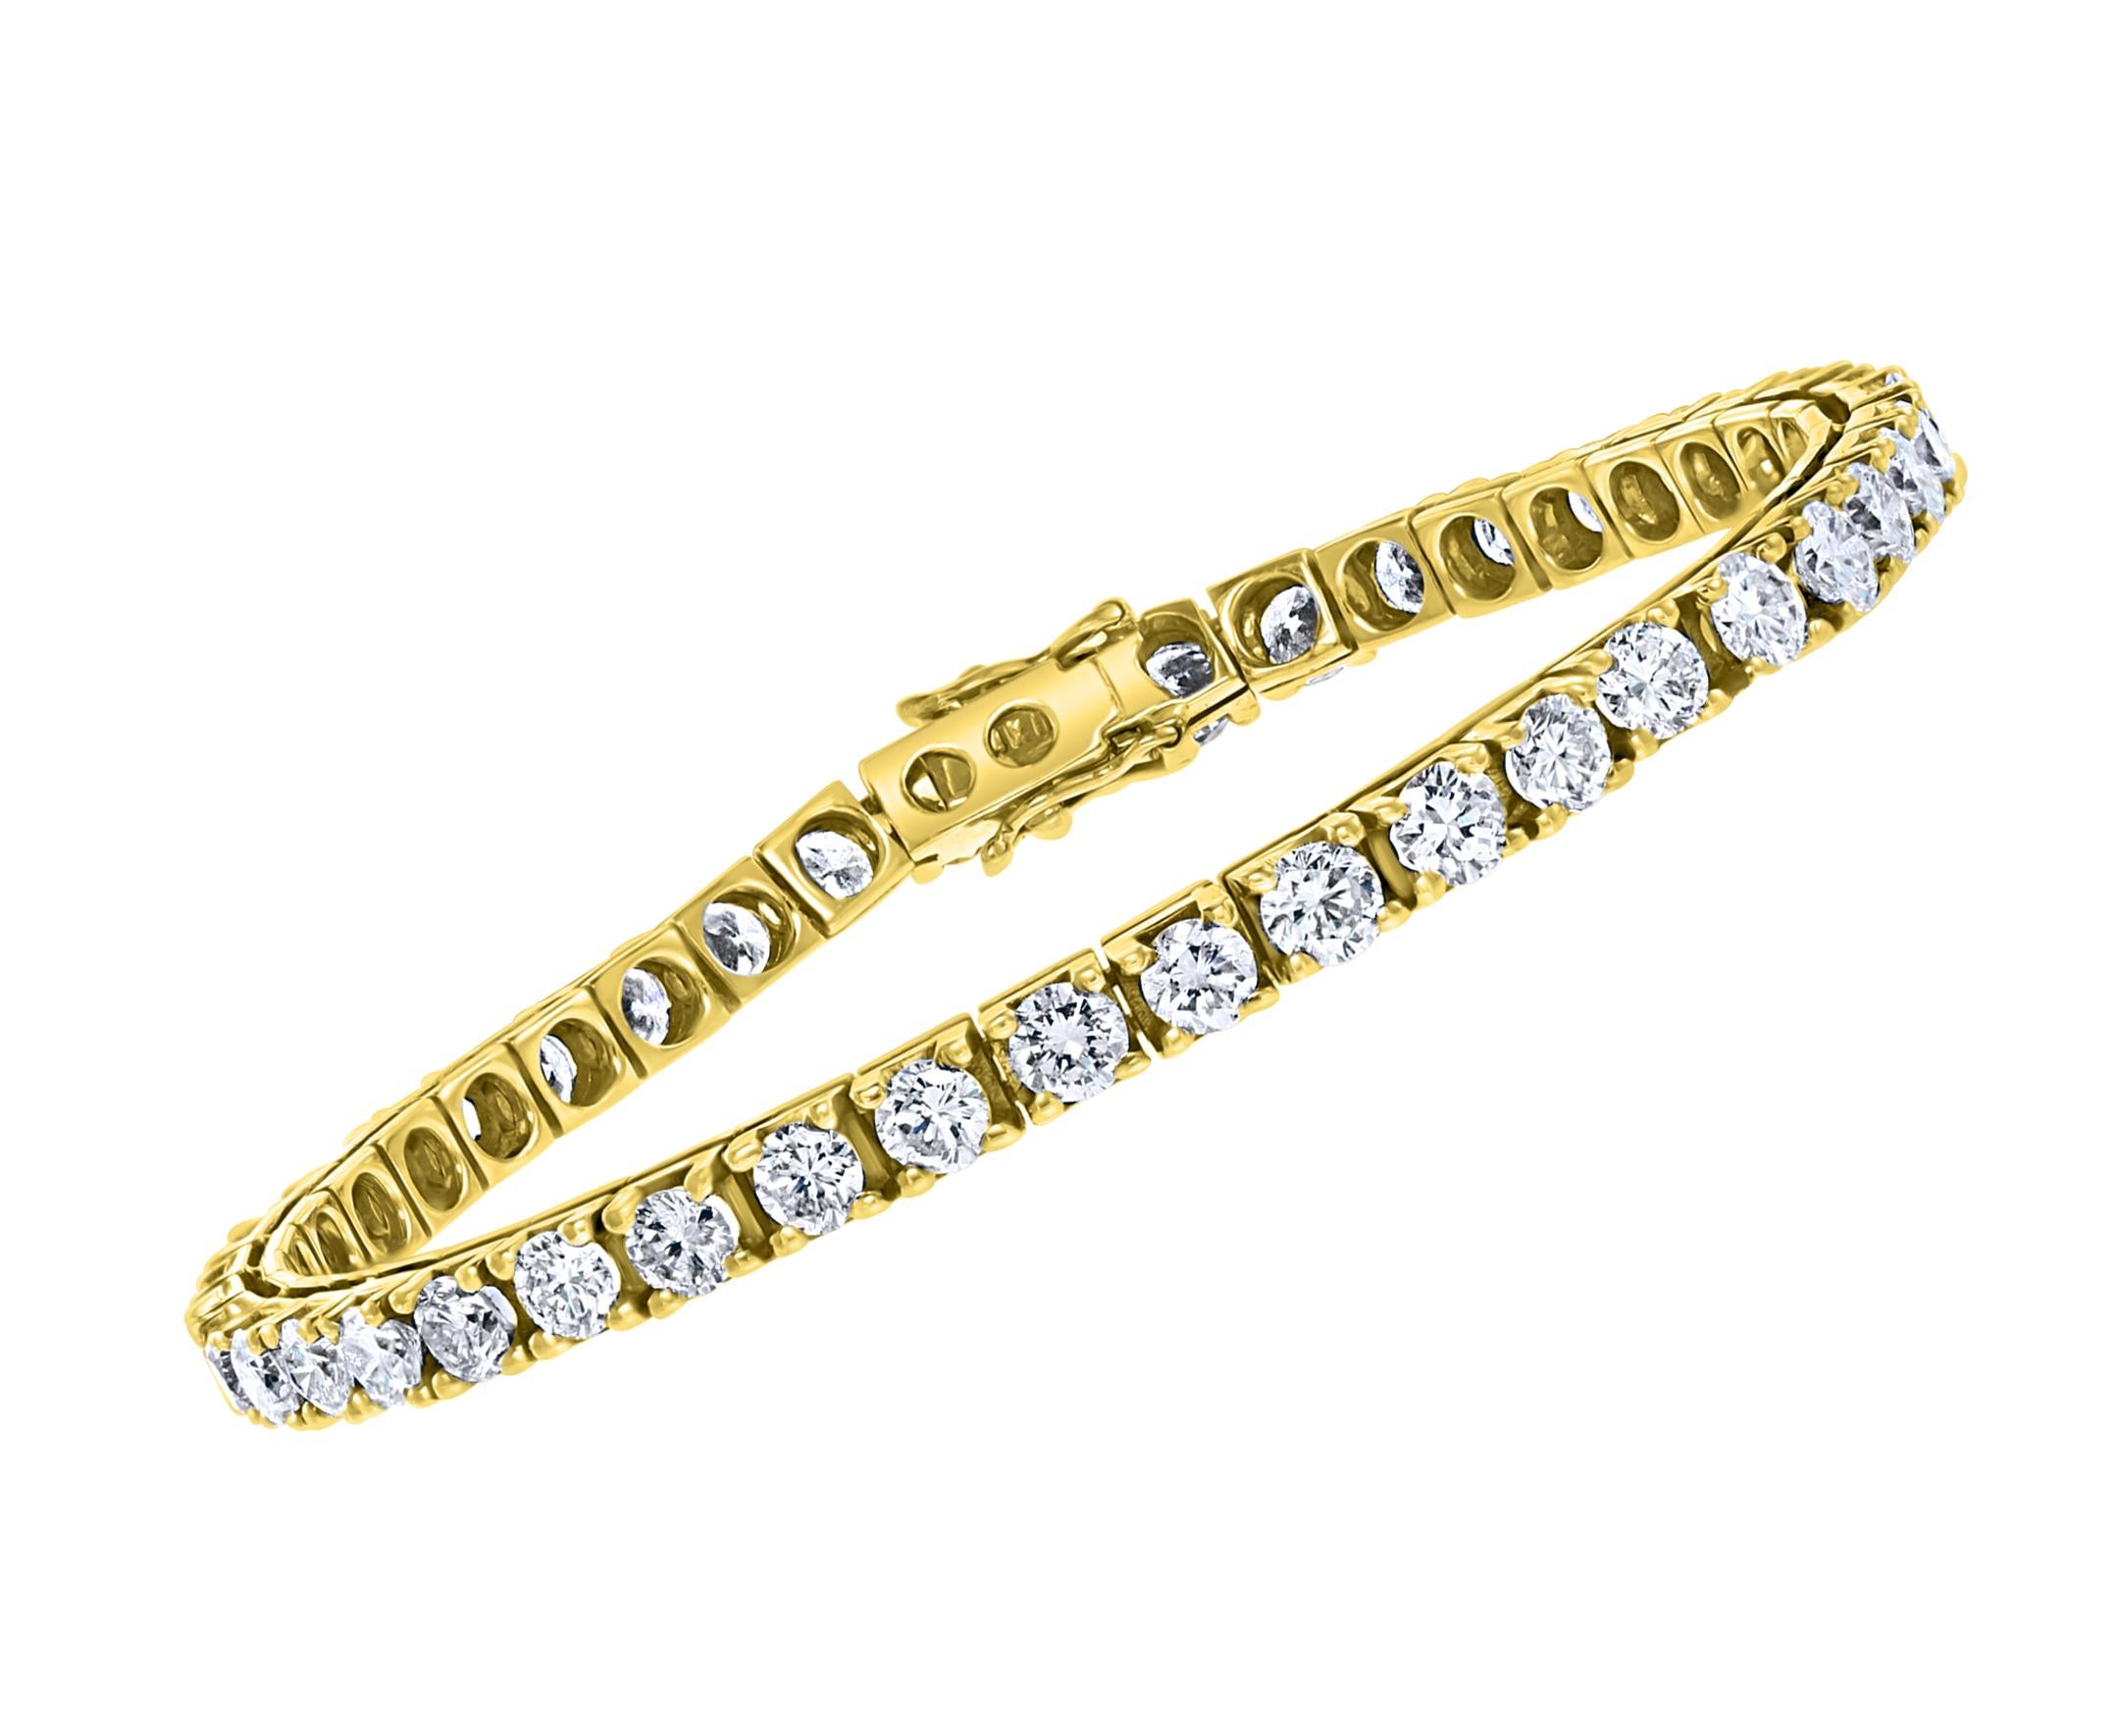 14 karat gold tennis bracelet